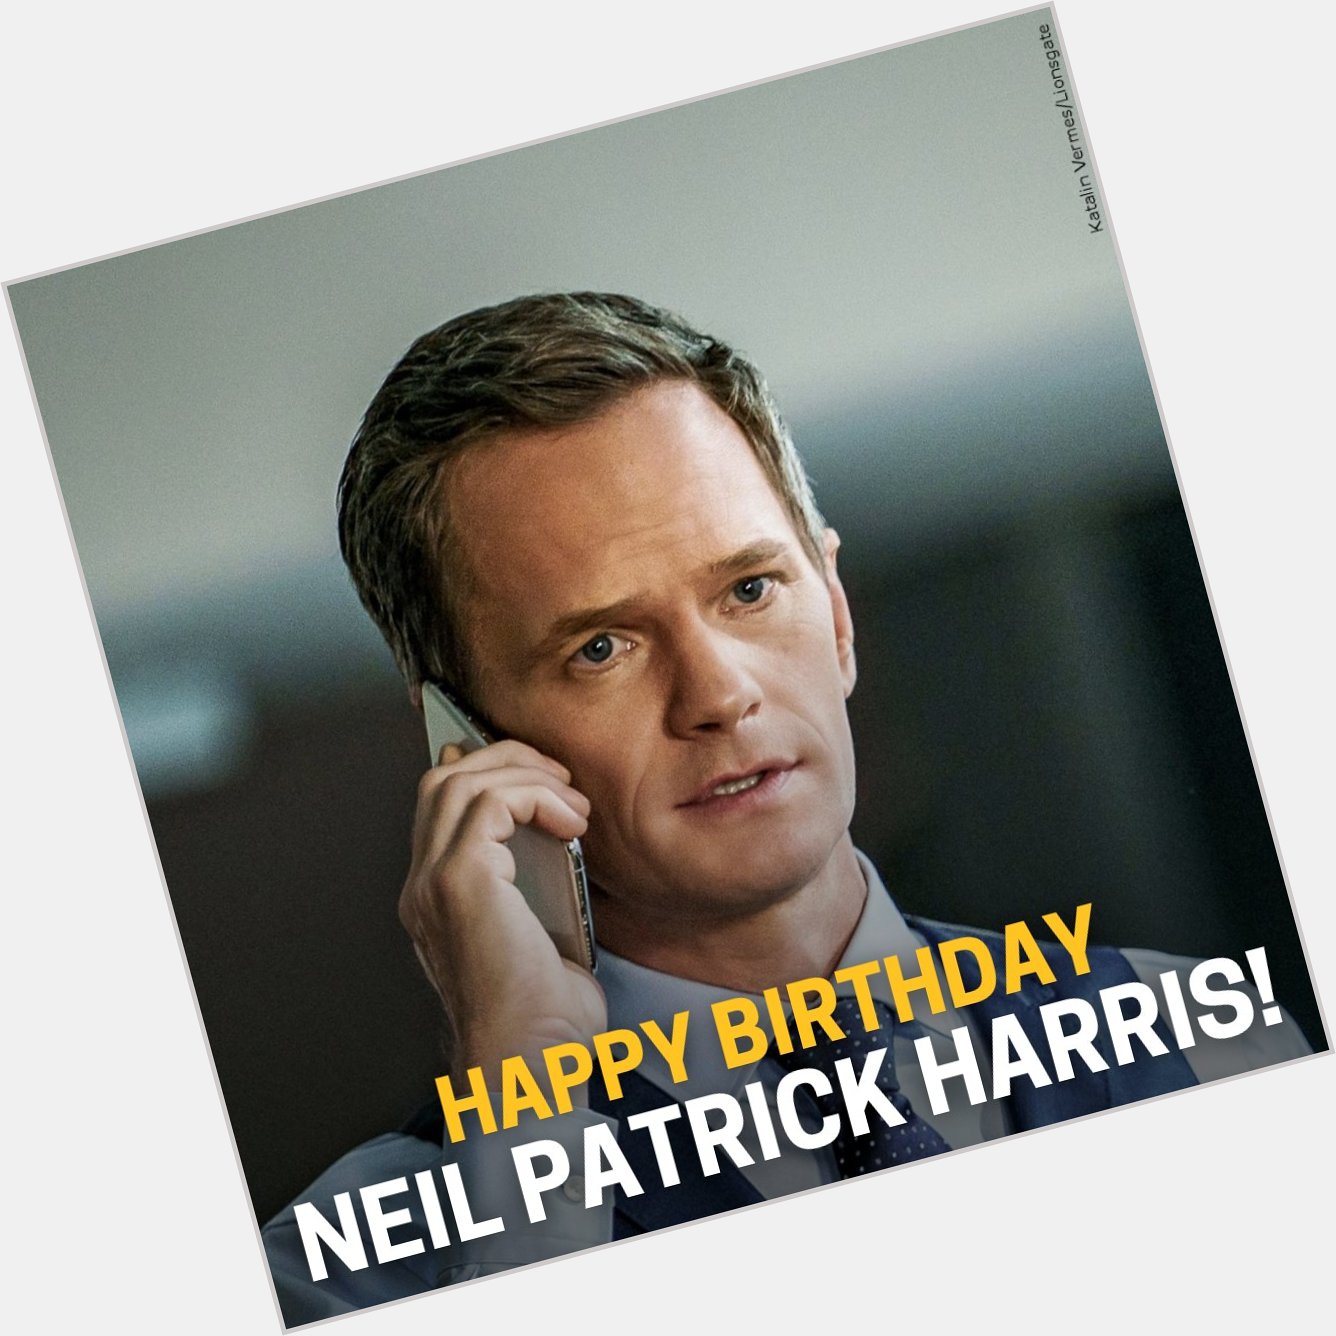 HAPPY BIRTHDAY! Actor Neil Patrick Harris turns 50 today! 